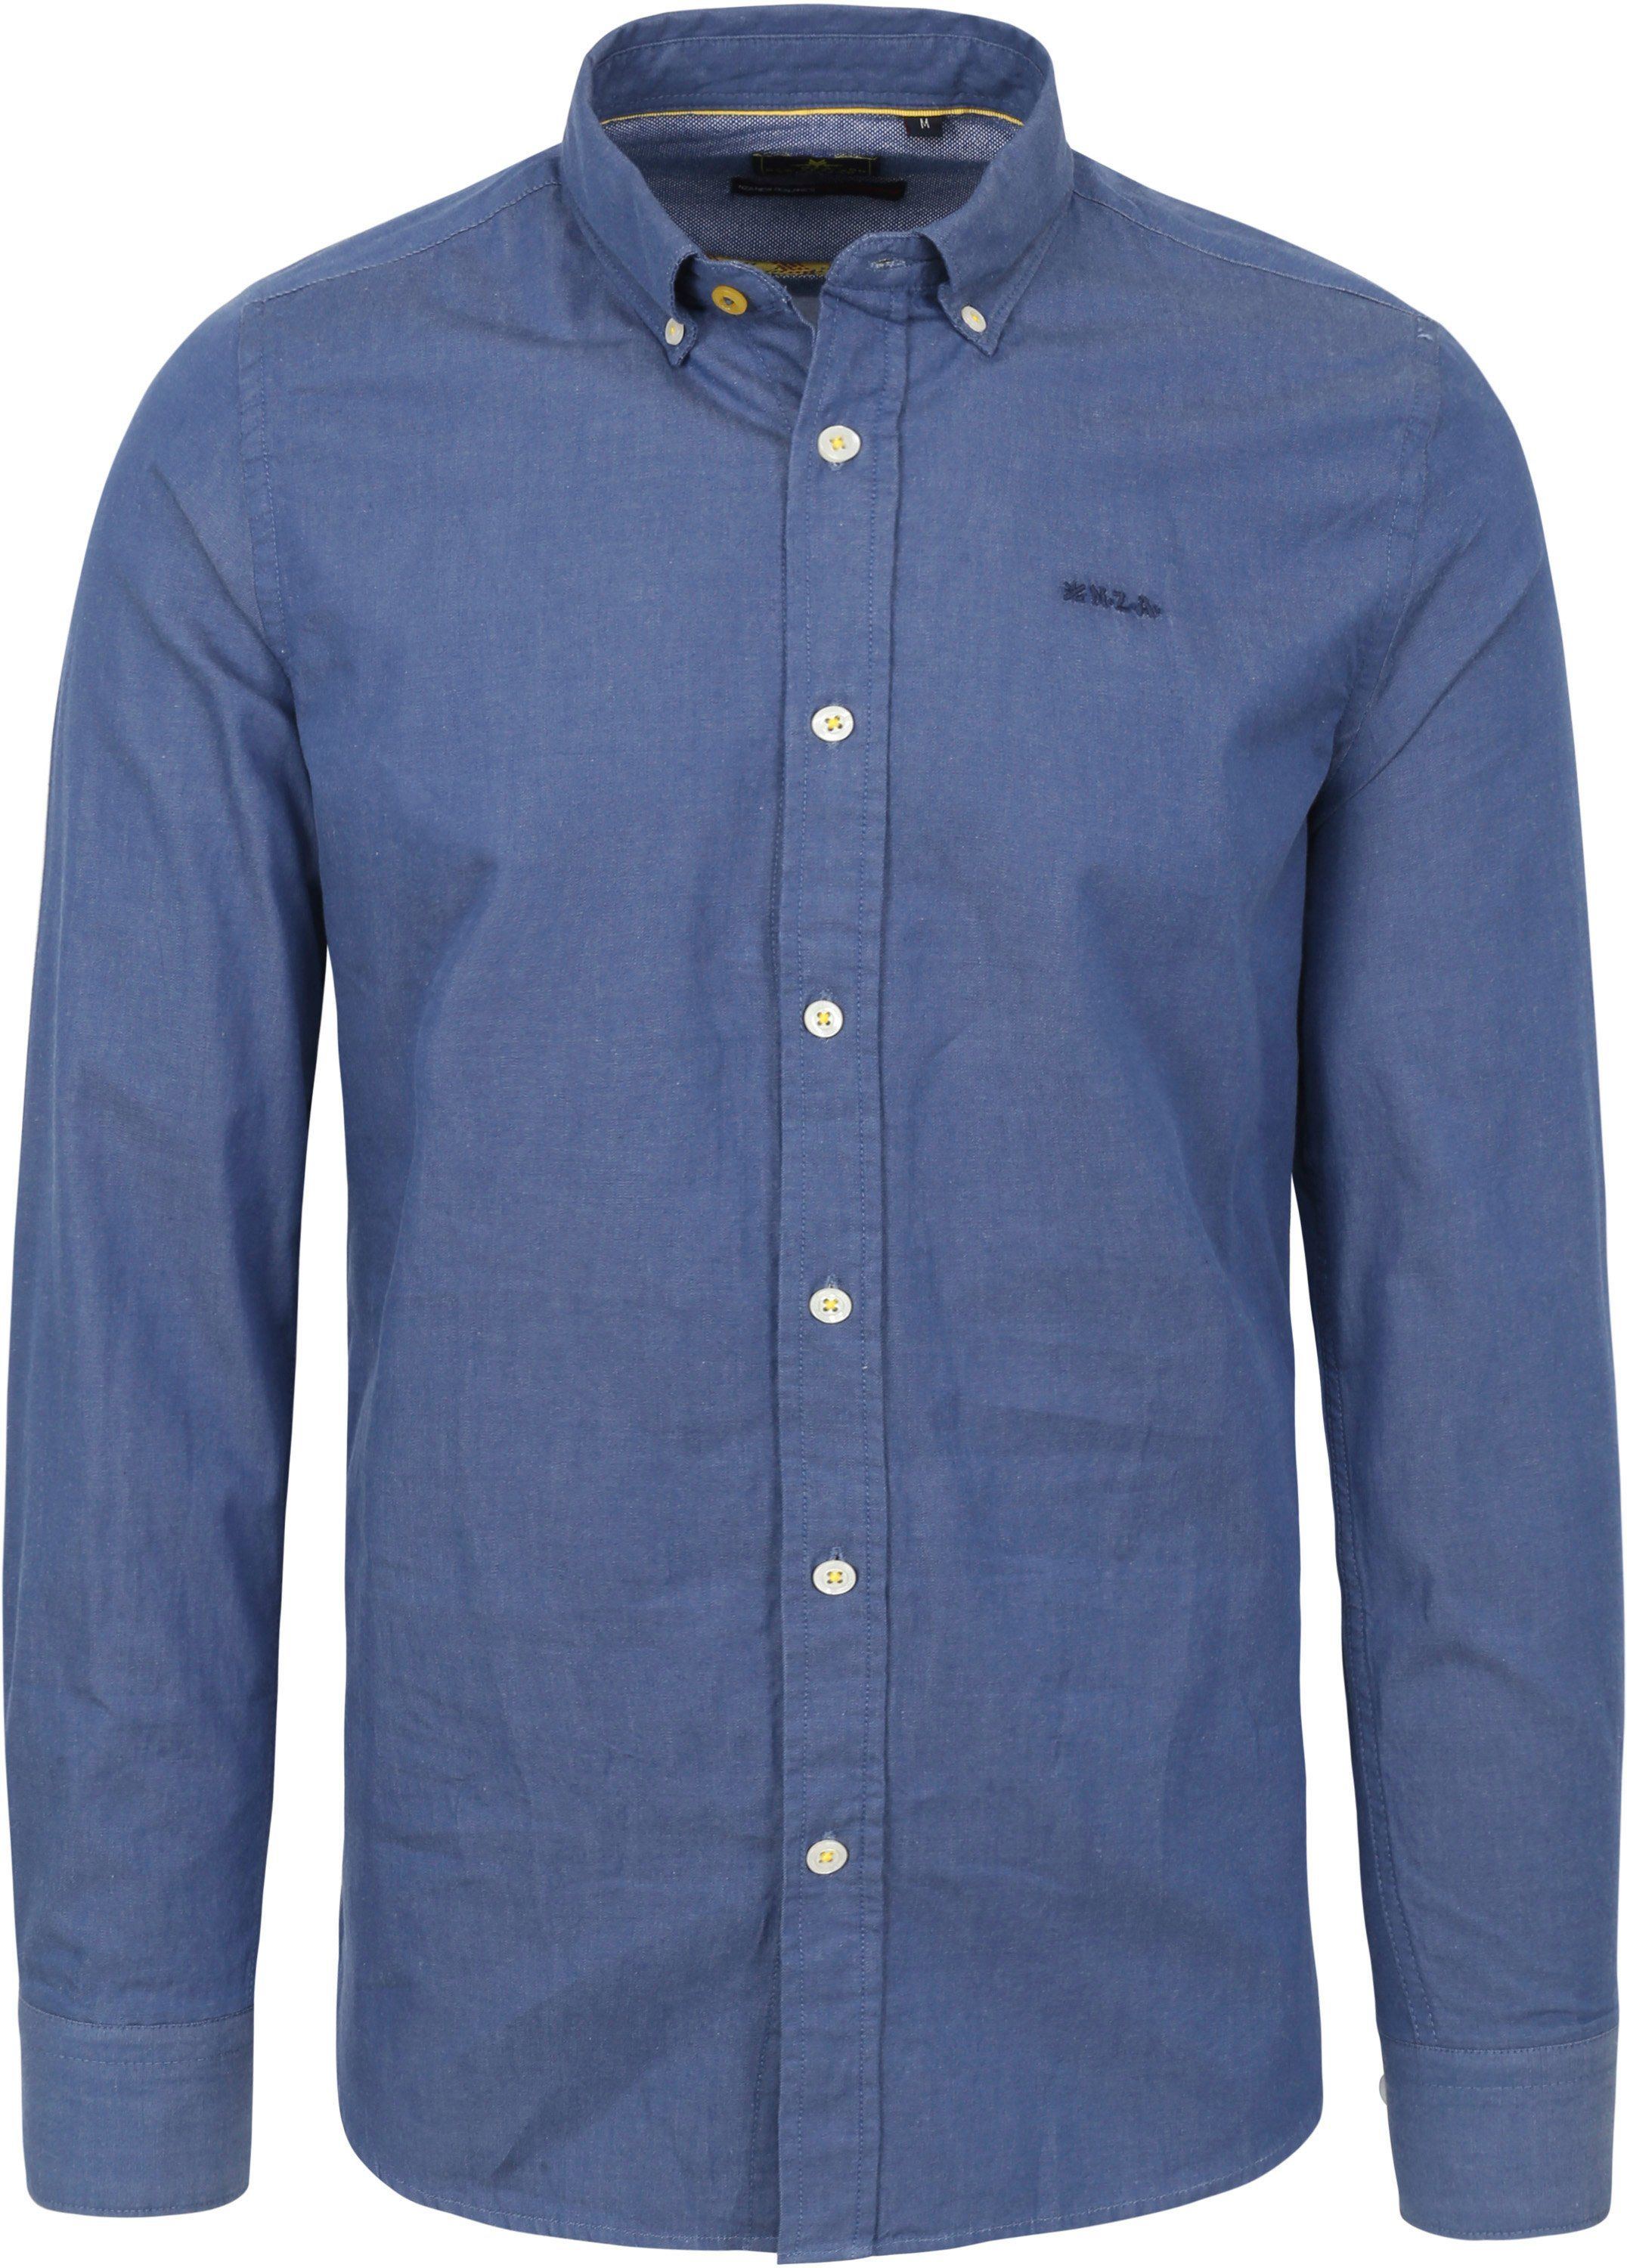 New Zealand Auckland - Nza shirt upper mangatawhiri blue size l